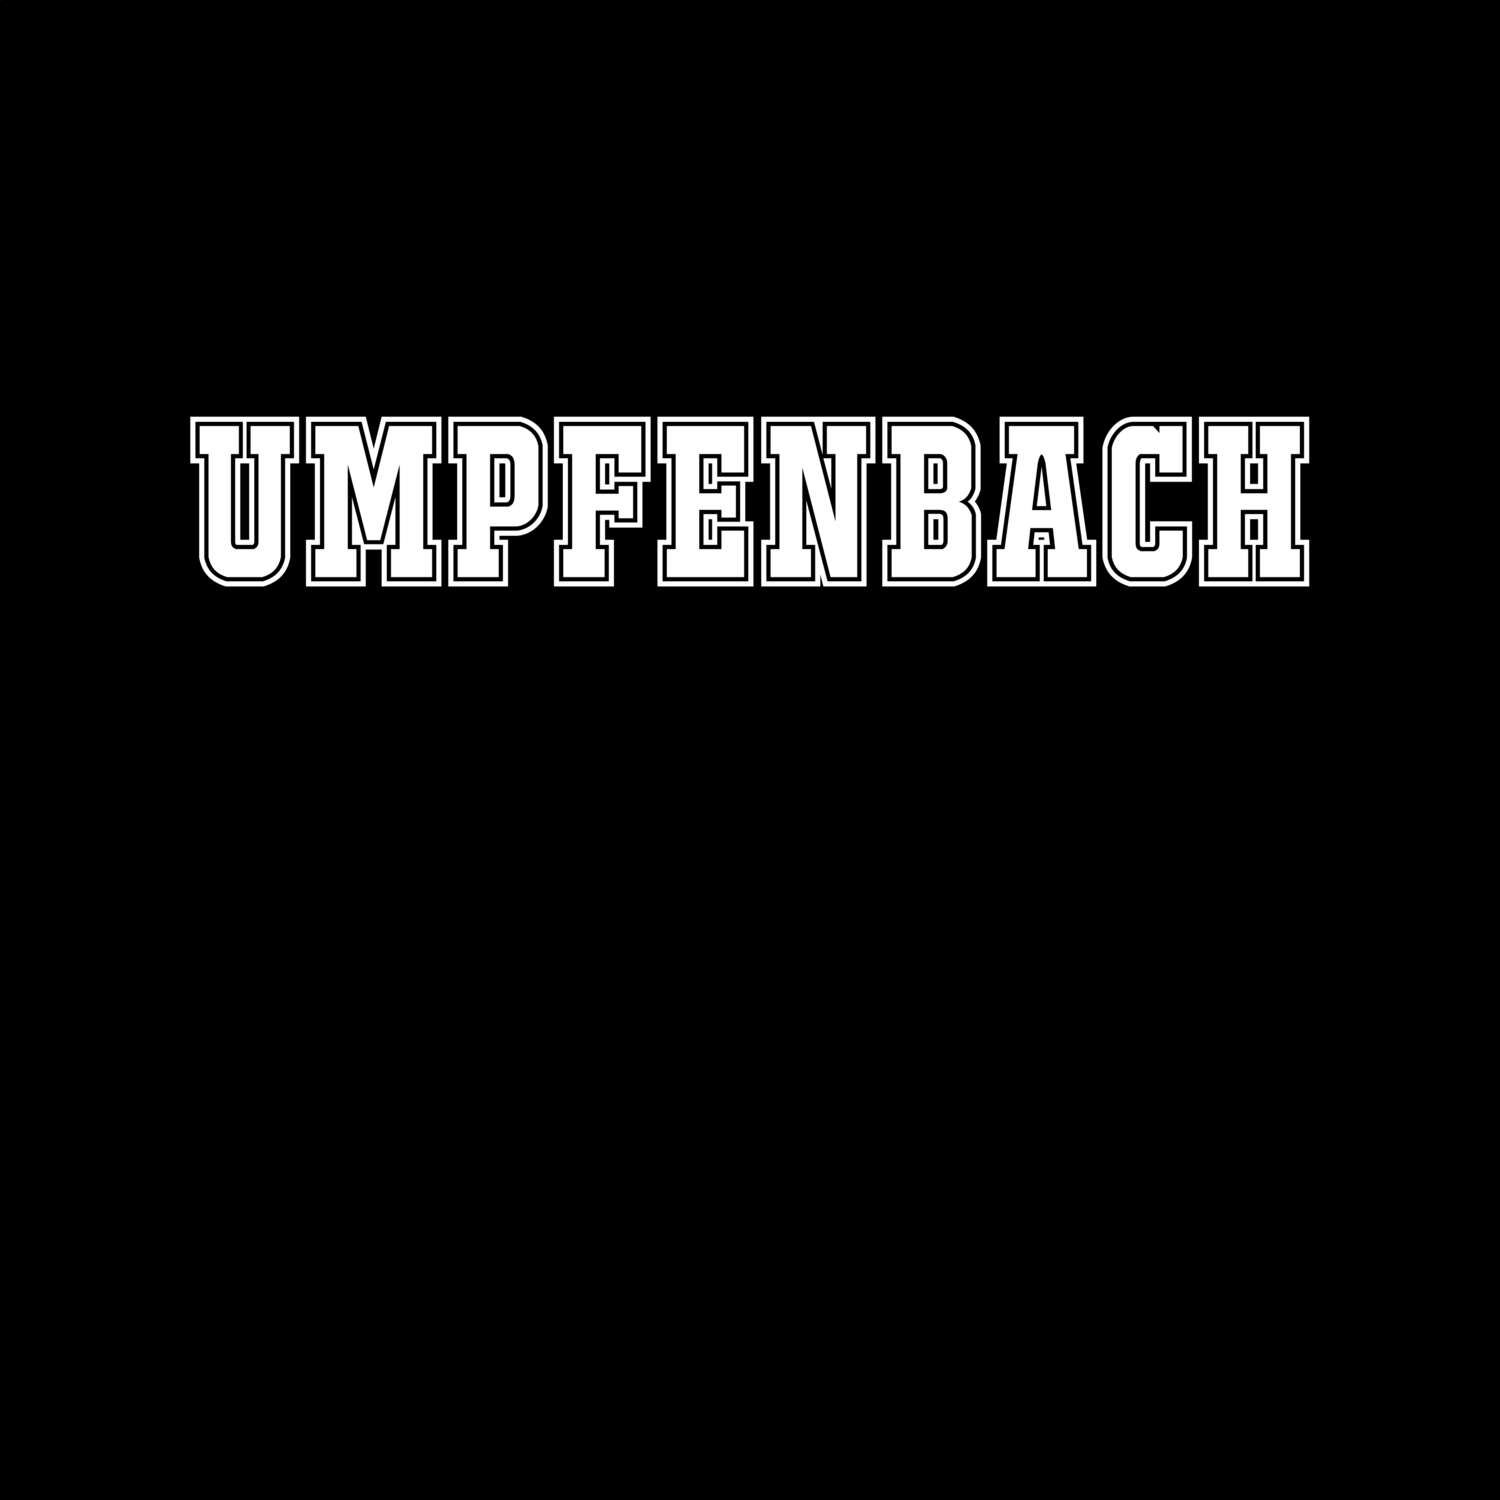 Umpfenbach T-Shirt »Classic«